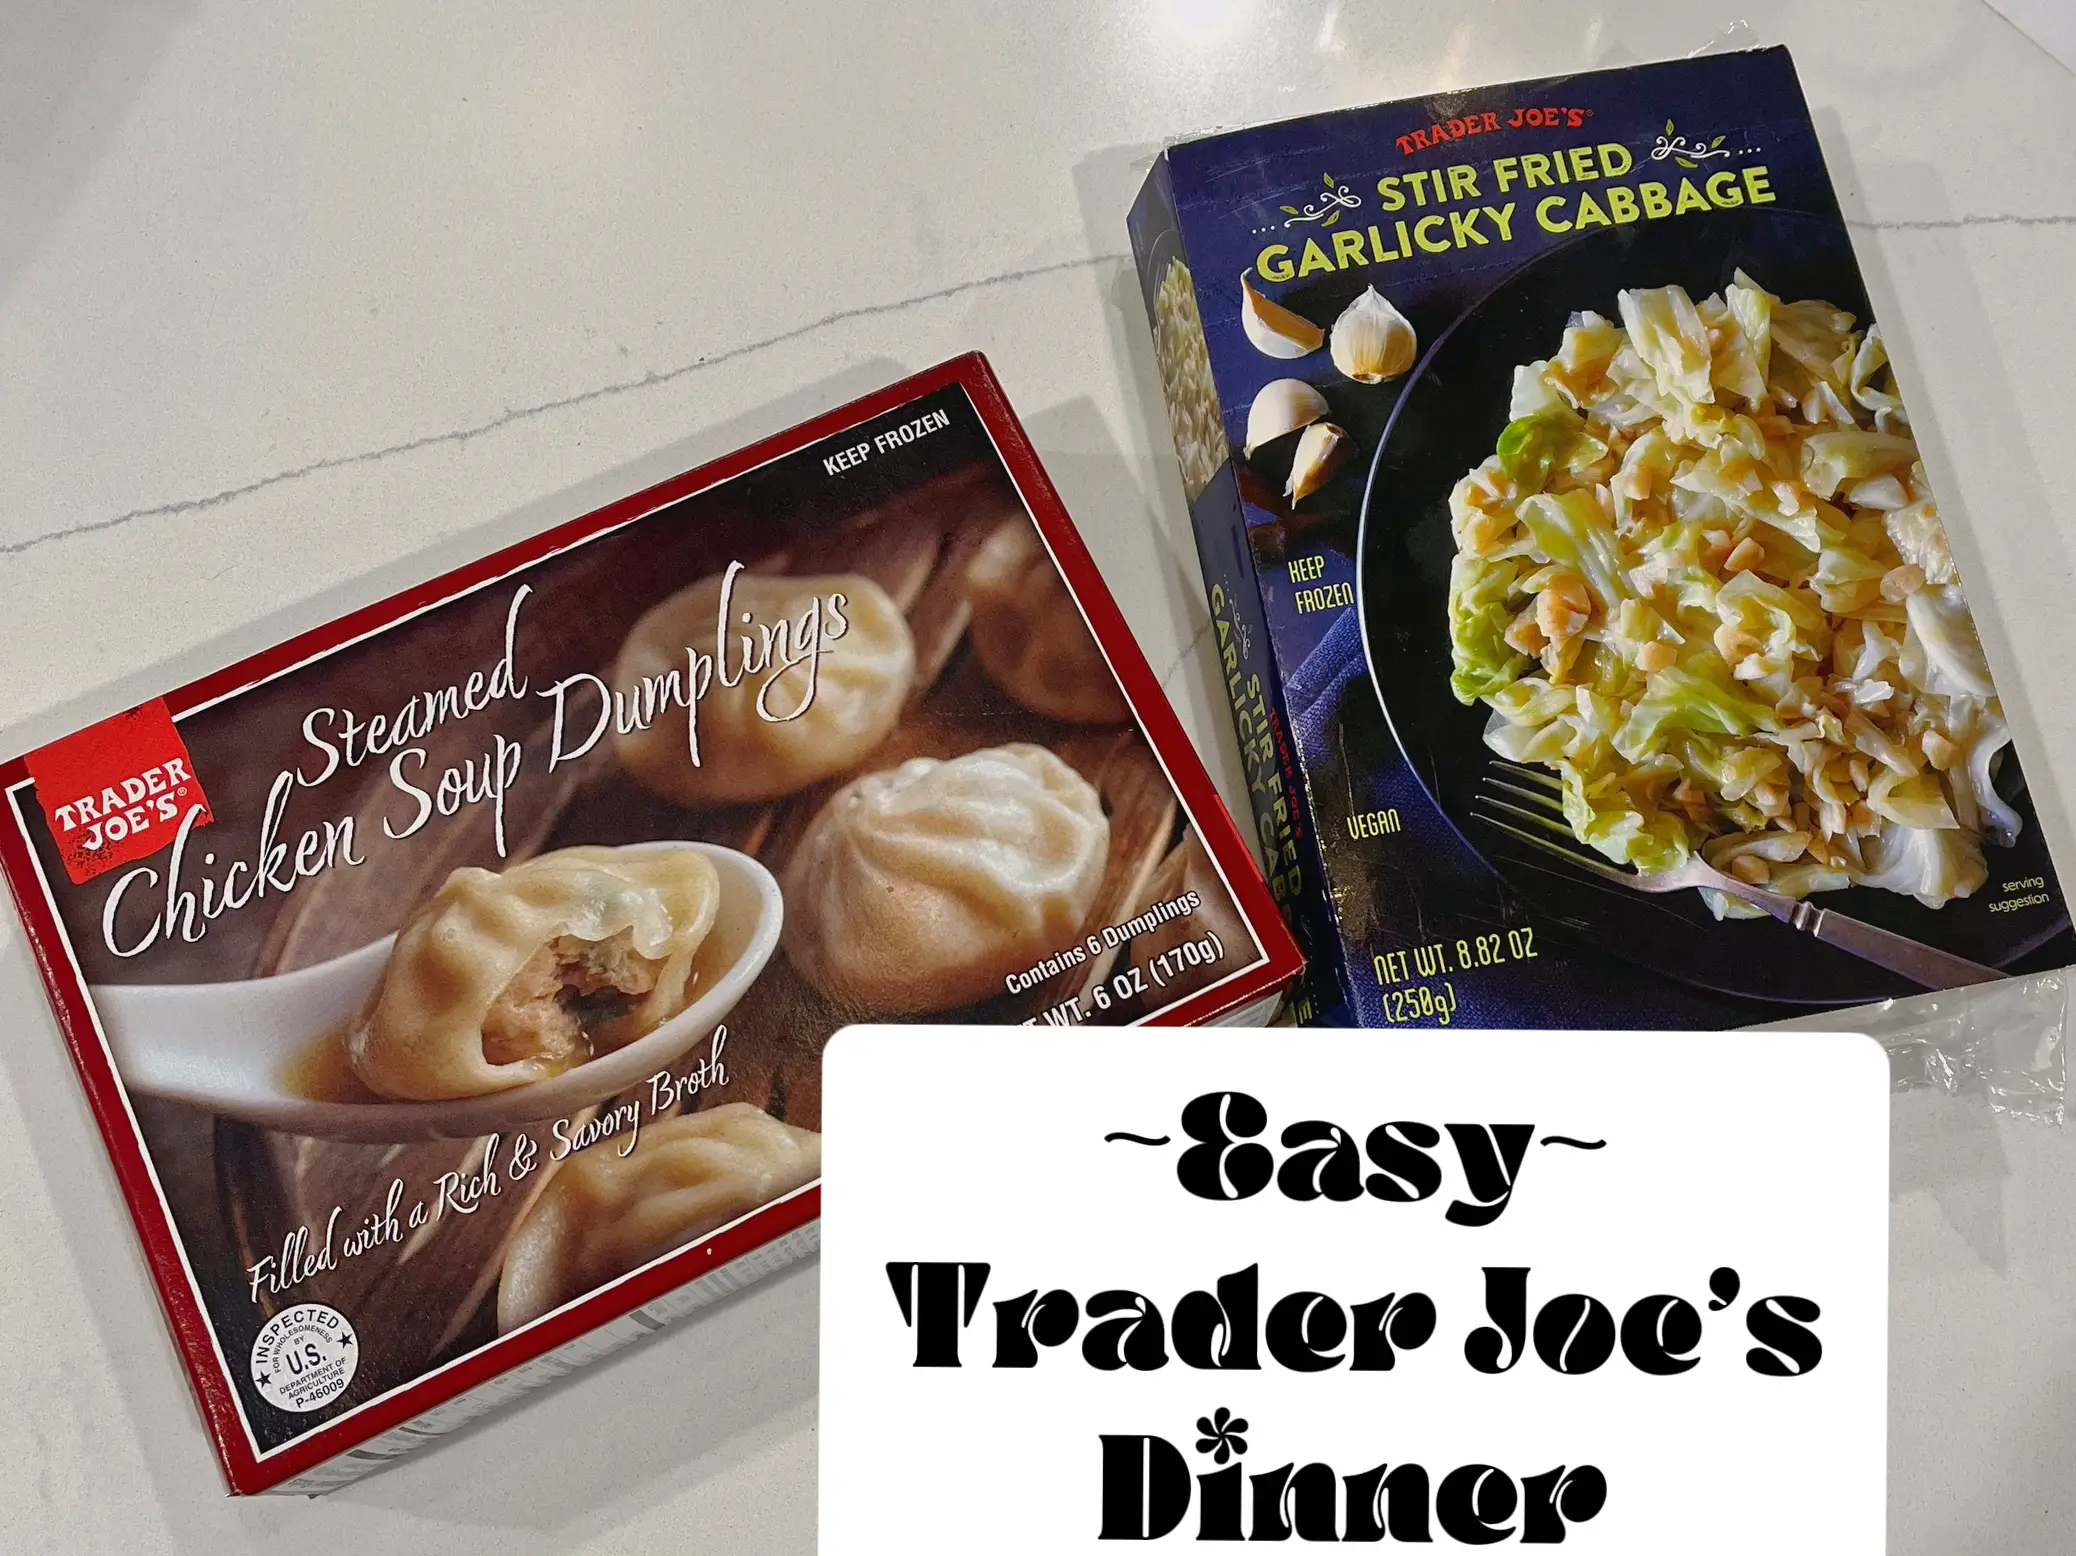 Healthy Trader Joe's Products: Meatless Sausage, Soup Dumplings & More